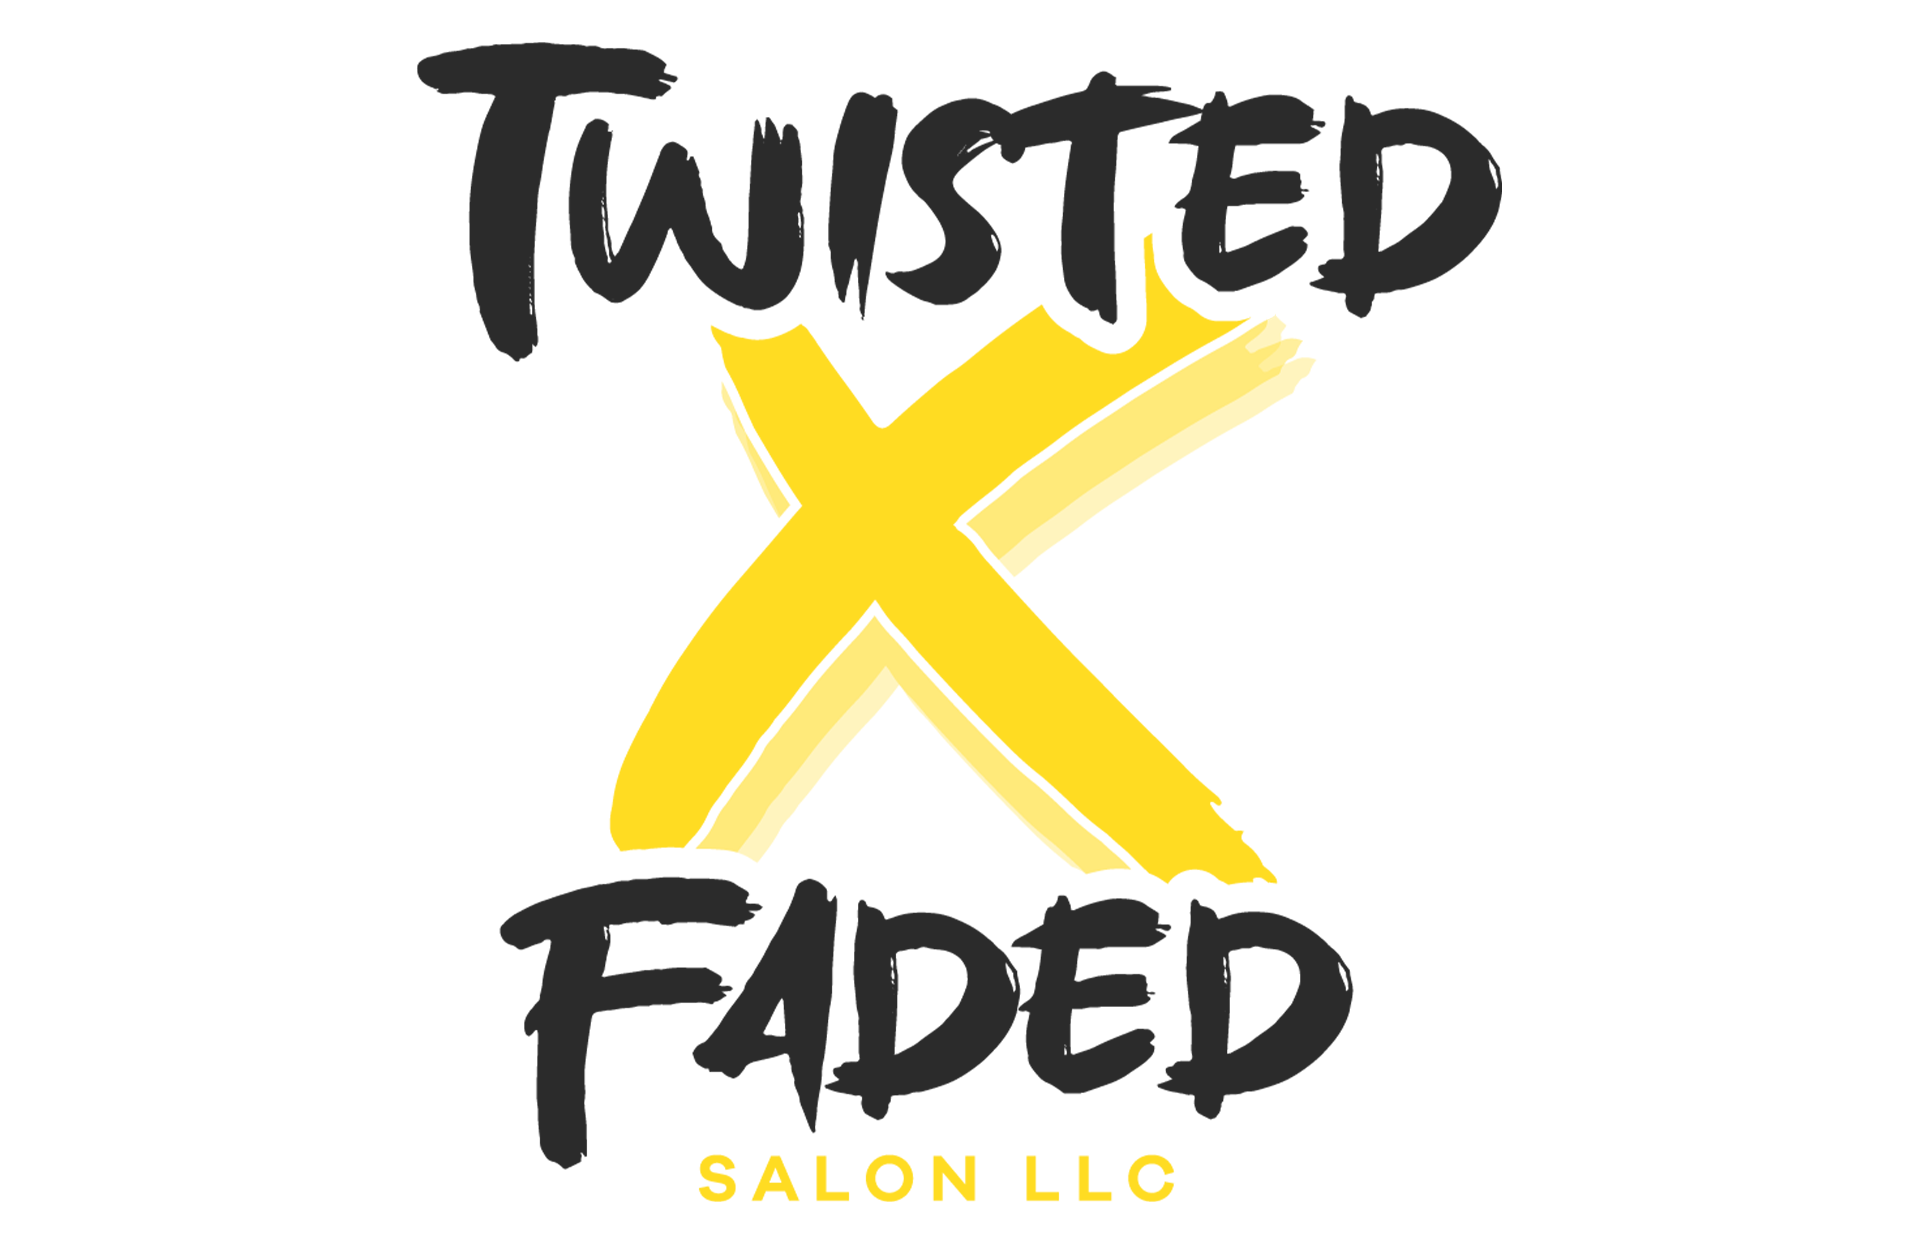 Twisted & Faded Salon